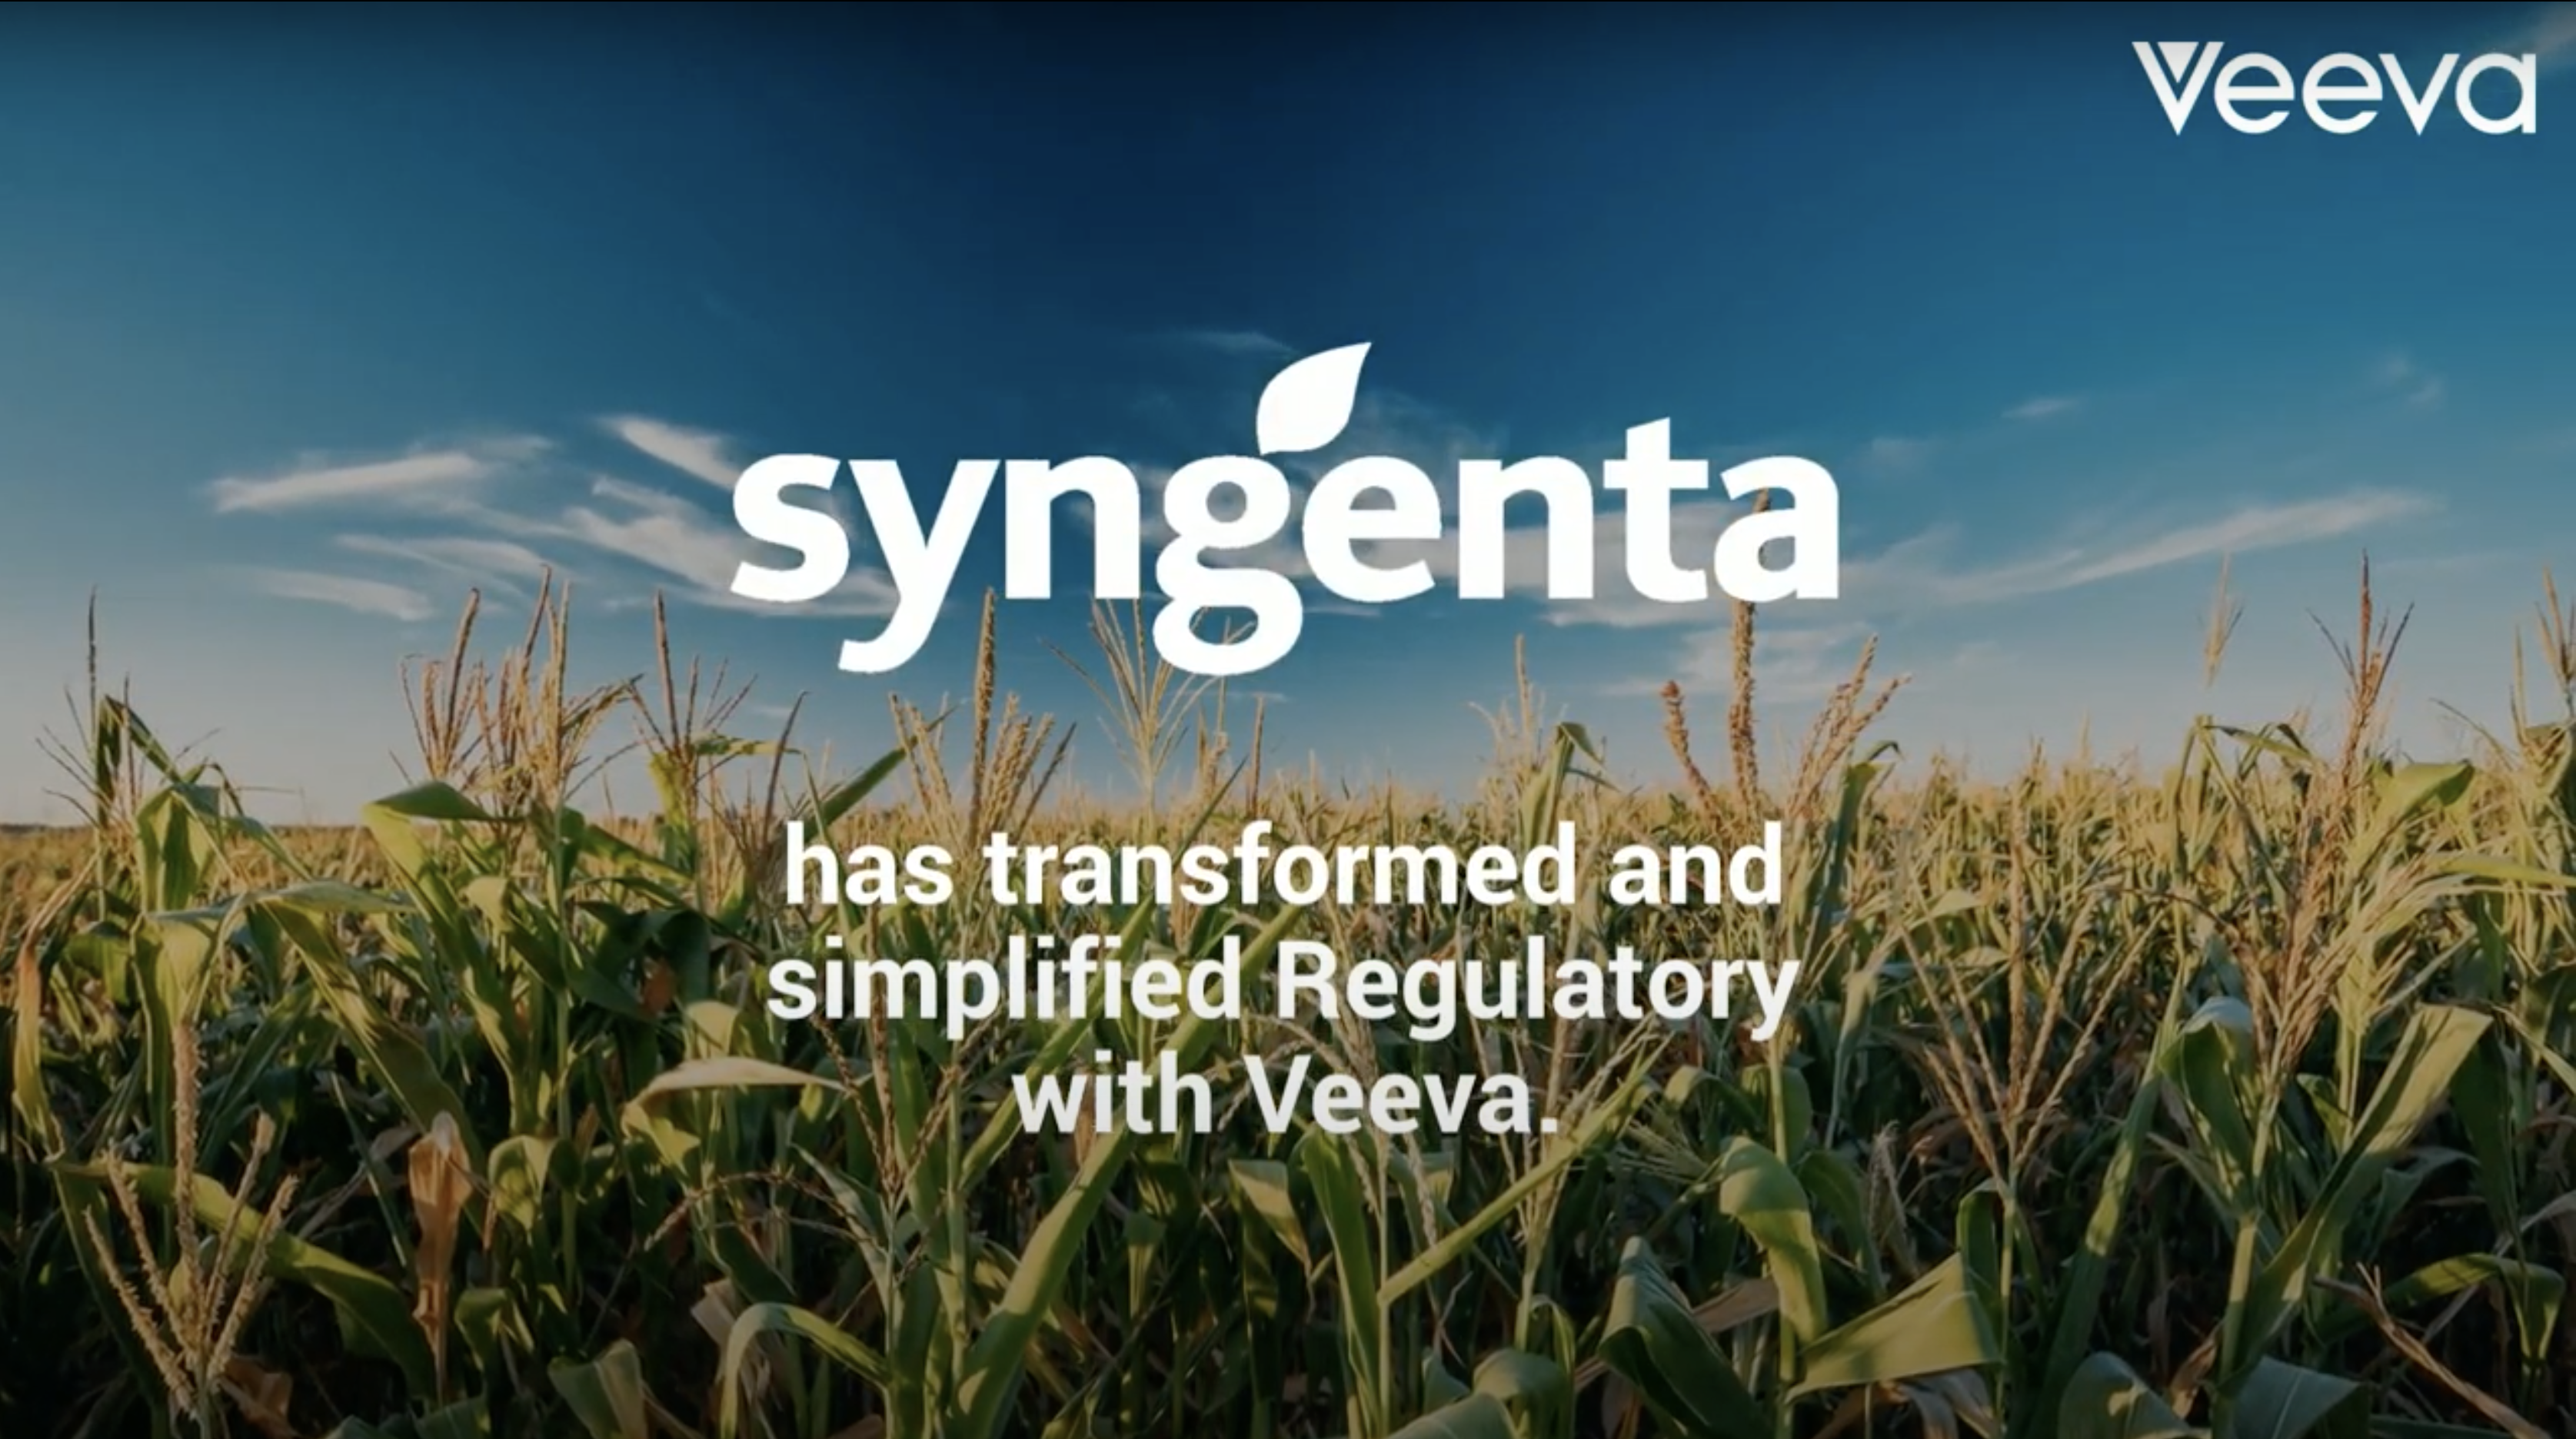 Syngenta and Veeva Transforming and simplifying Regulatory